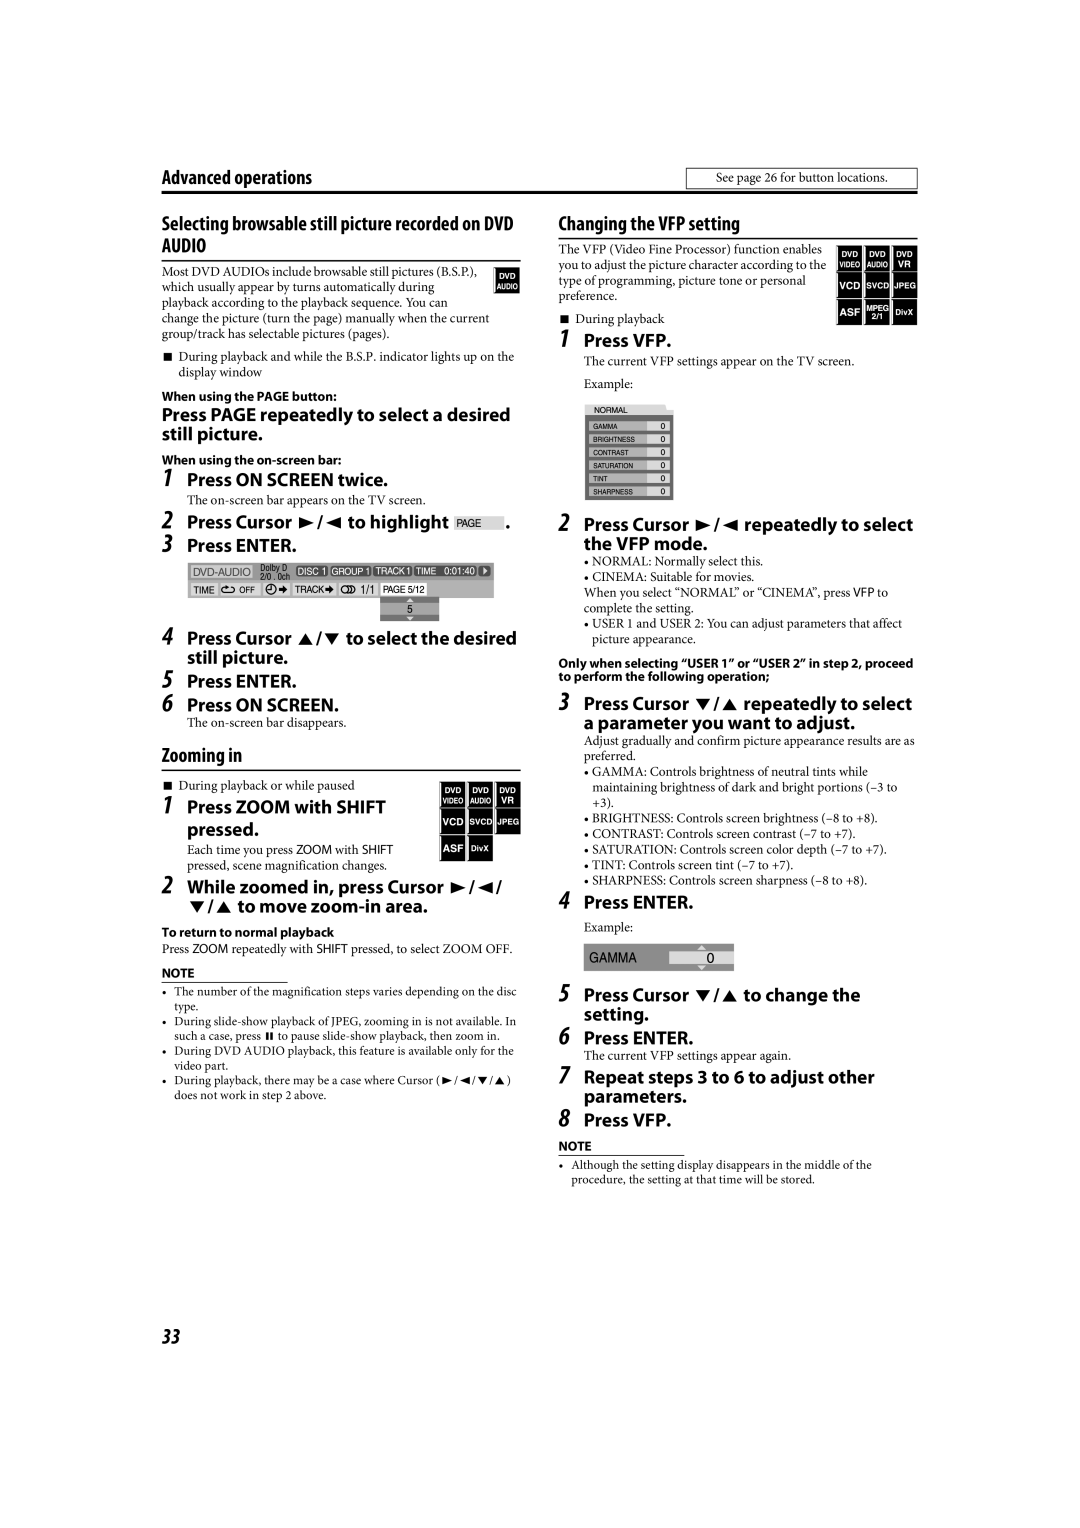 JVC LVT1504-005B manual 1Press ON SCREEN twice, Press Cursor 3/2 to highlight, Press ENTER 6 Press ON SCREEN, Press VFP 